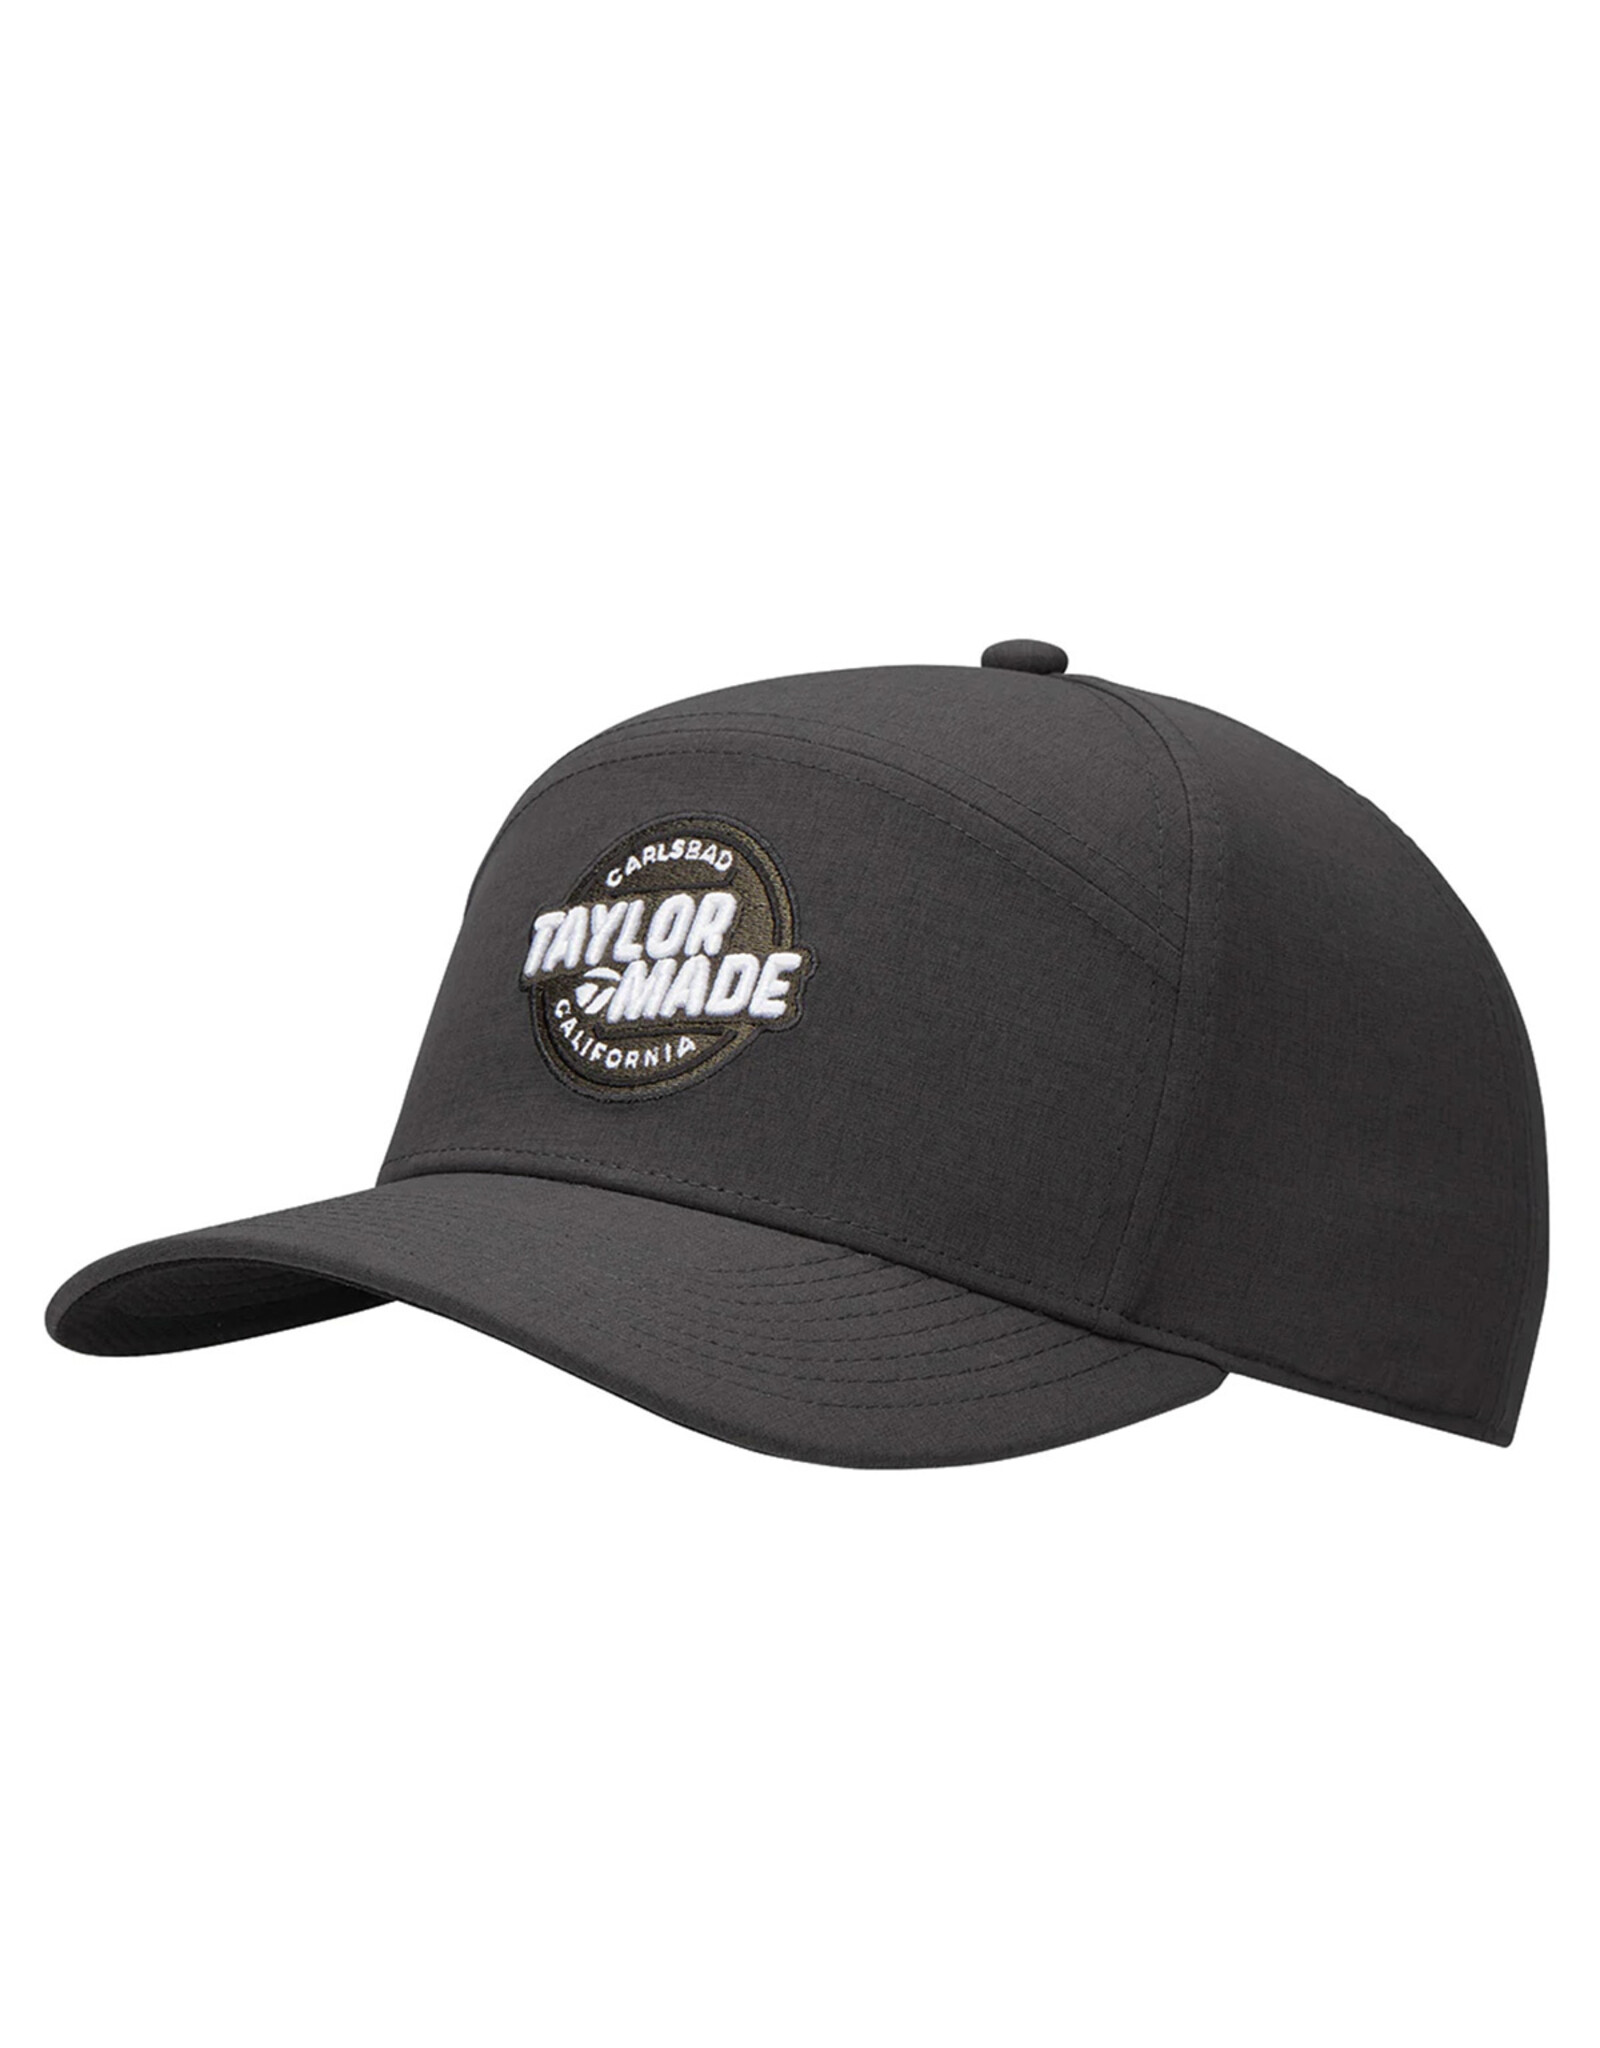 TaylorMade TaylorMade Lifestyle Horizon Snapback Hat